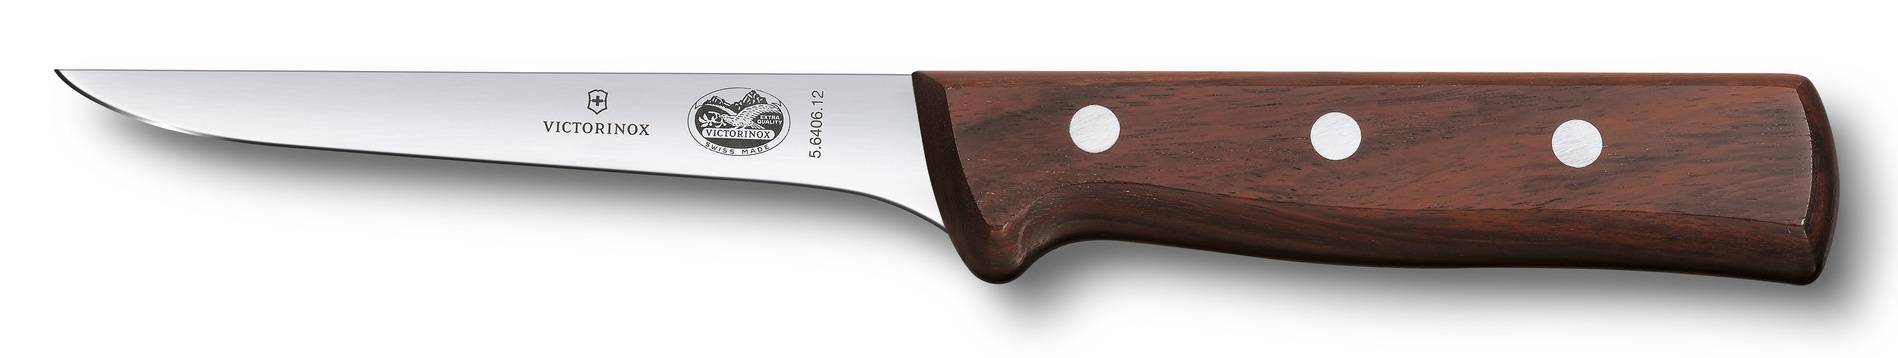 Нож Victorinox Wood дерево (5.6406.12)